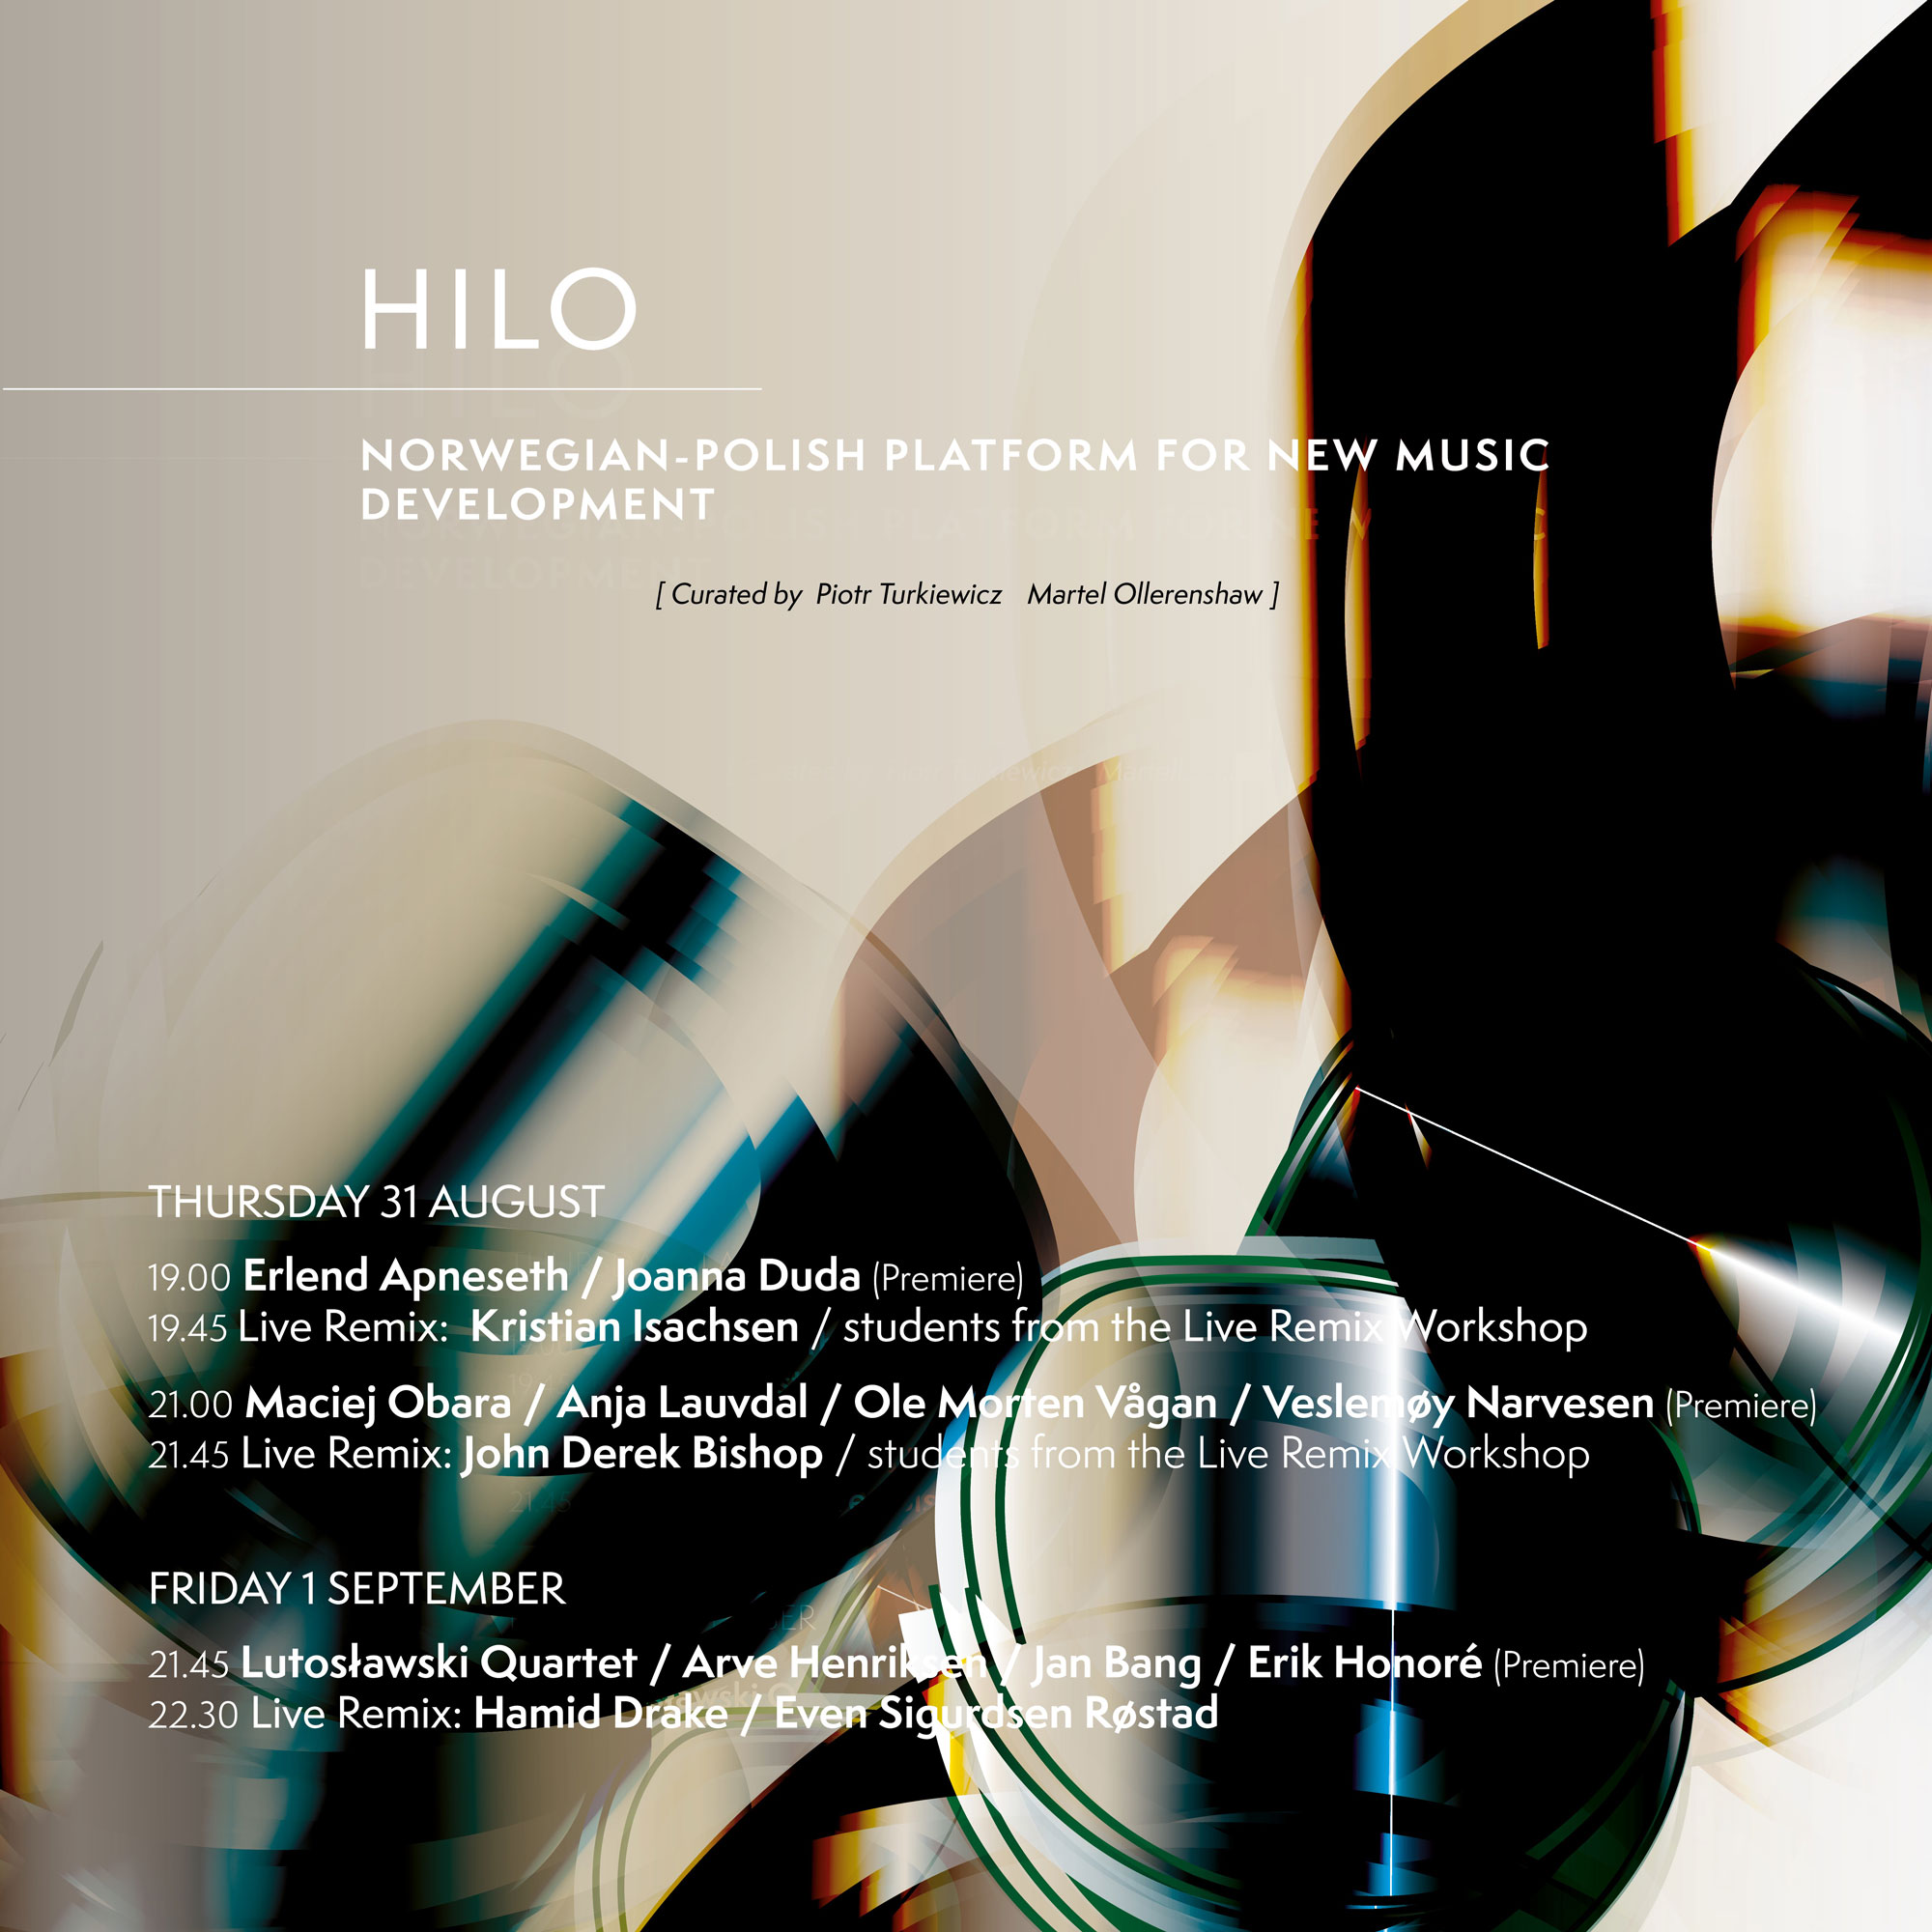 HILO - Norwegian-Polish Platform for New Music Development